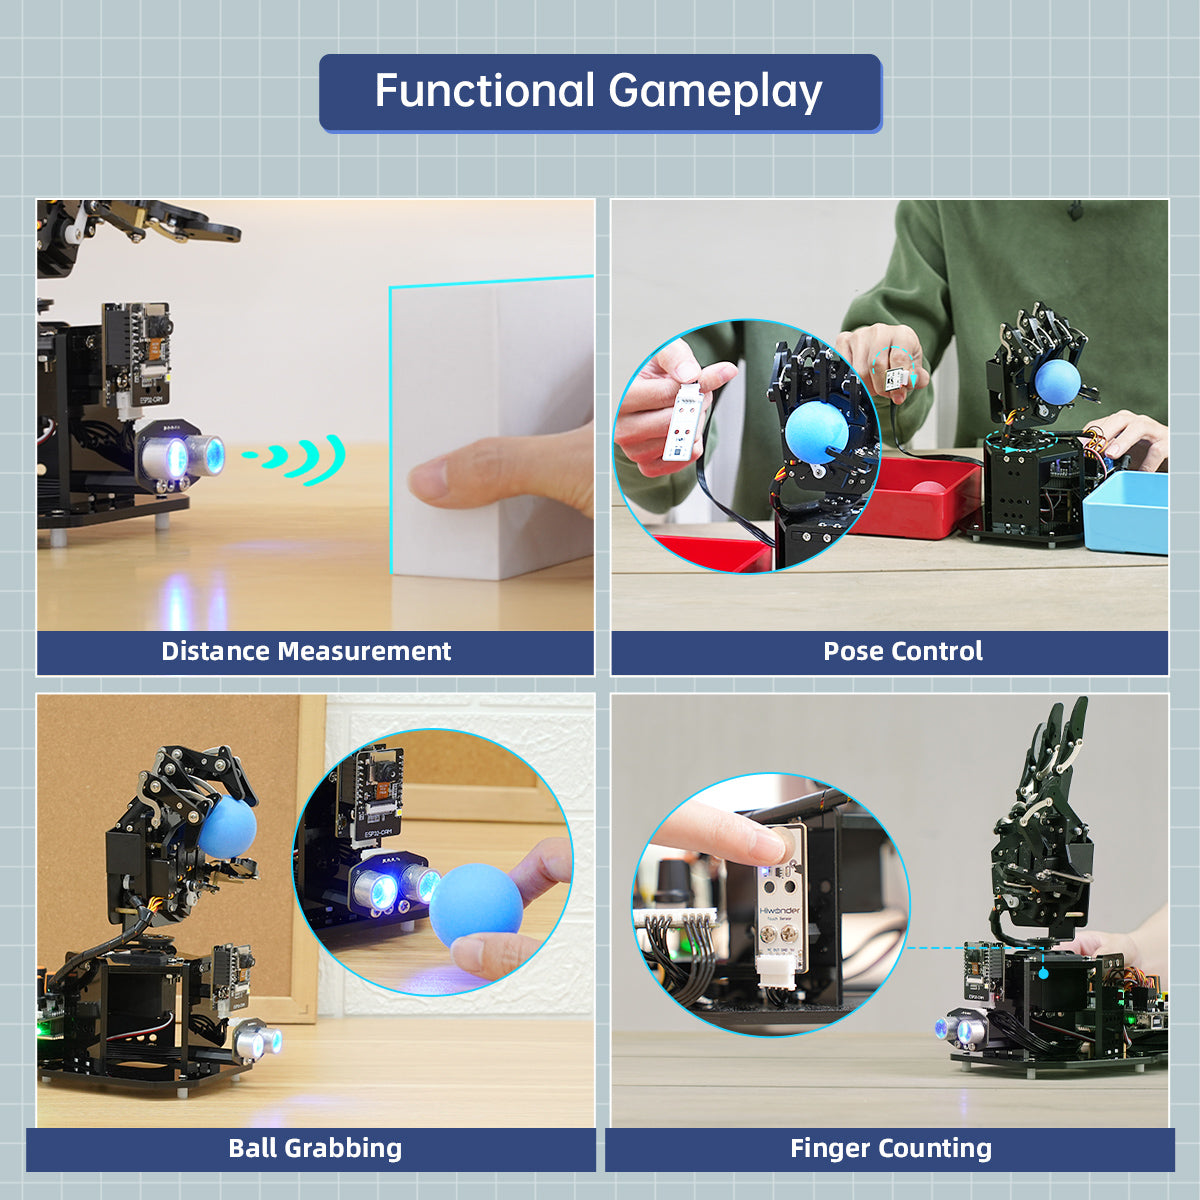 uHand UNO Open Source AI Bionic Robot Hand Support Somatosensory Control, Arduino Programming